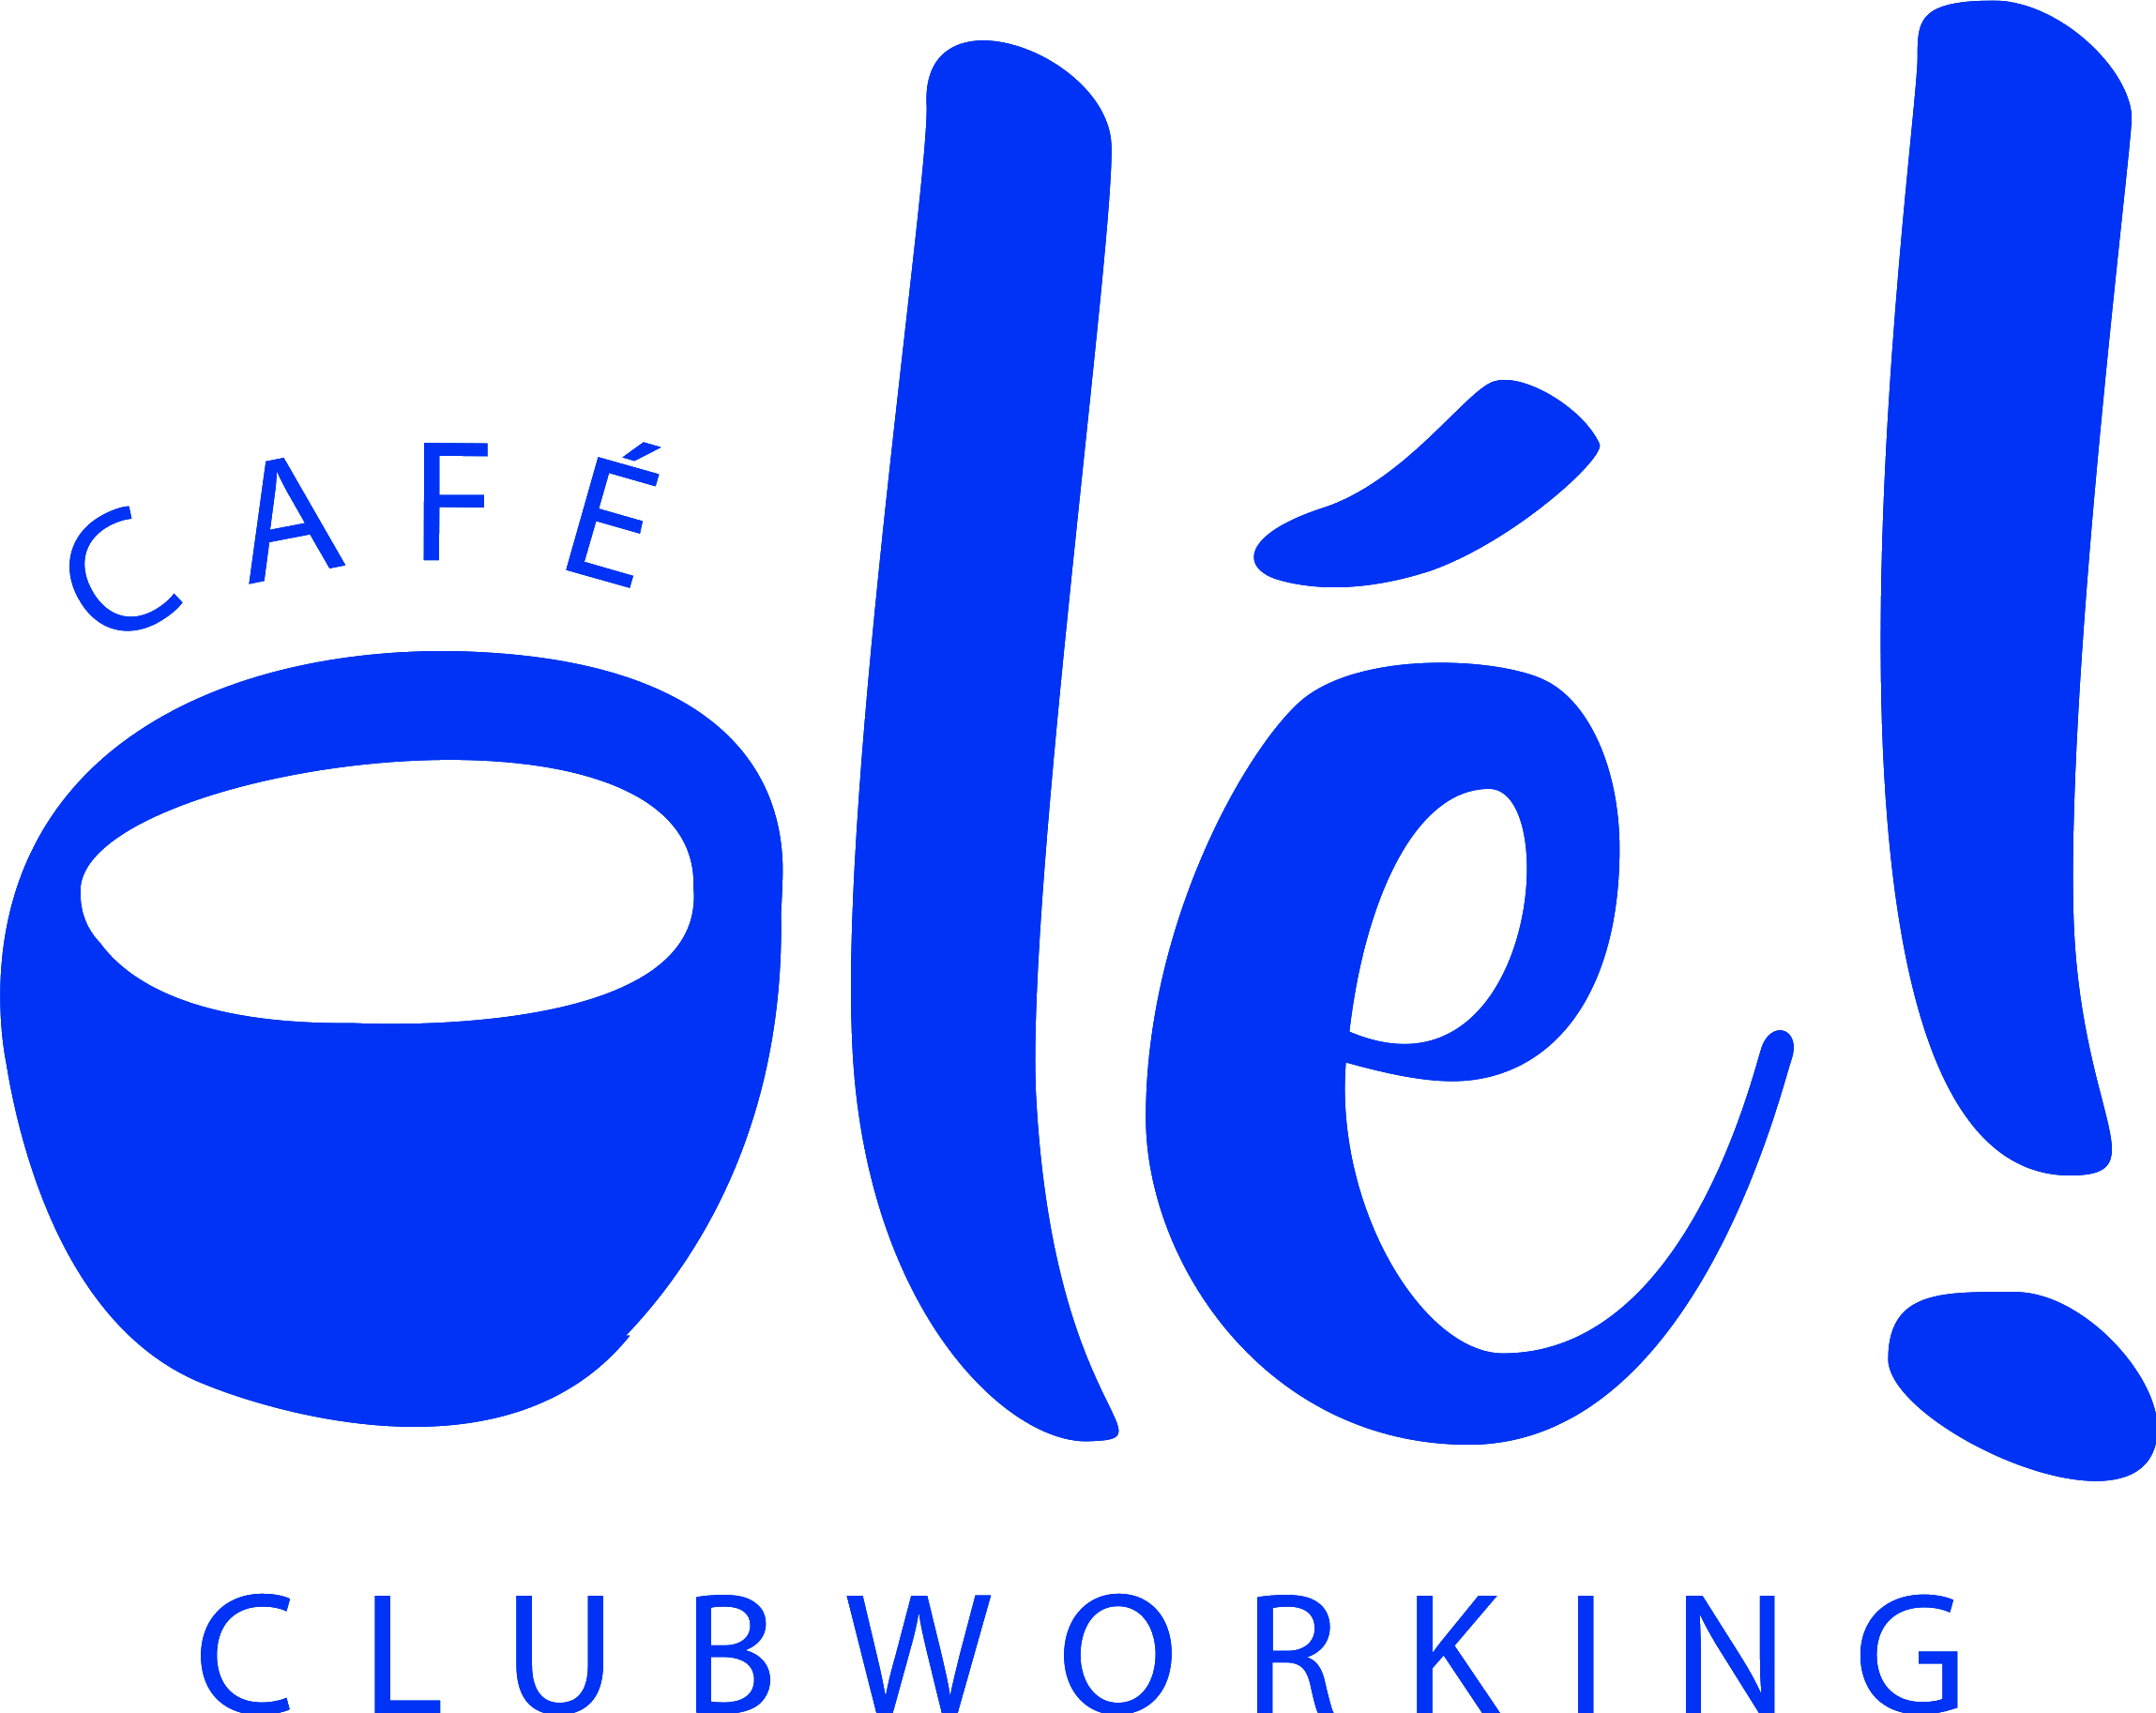 CaféOlé! Clubworking